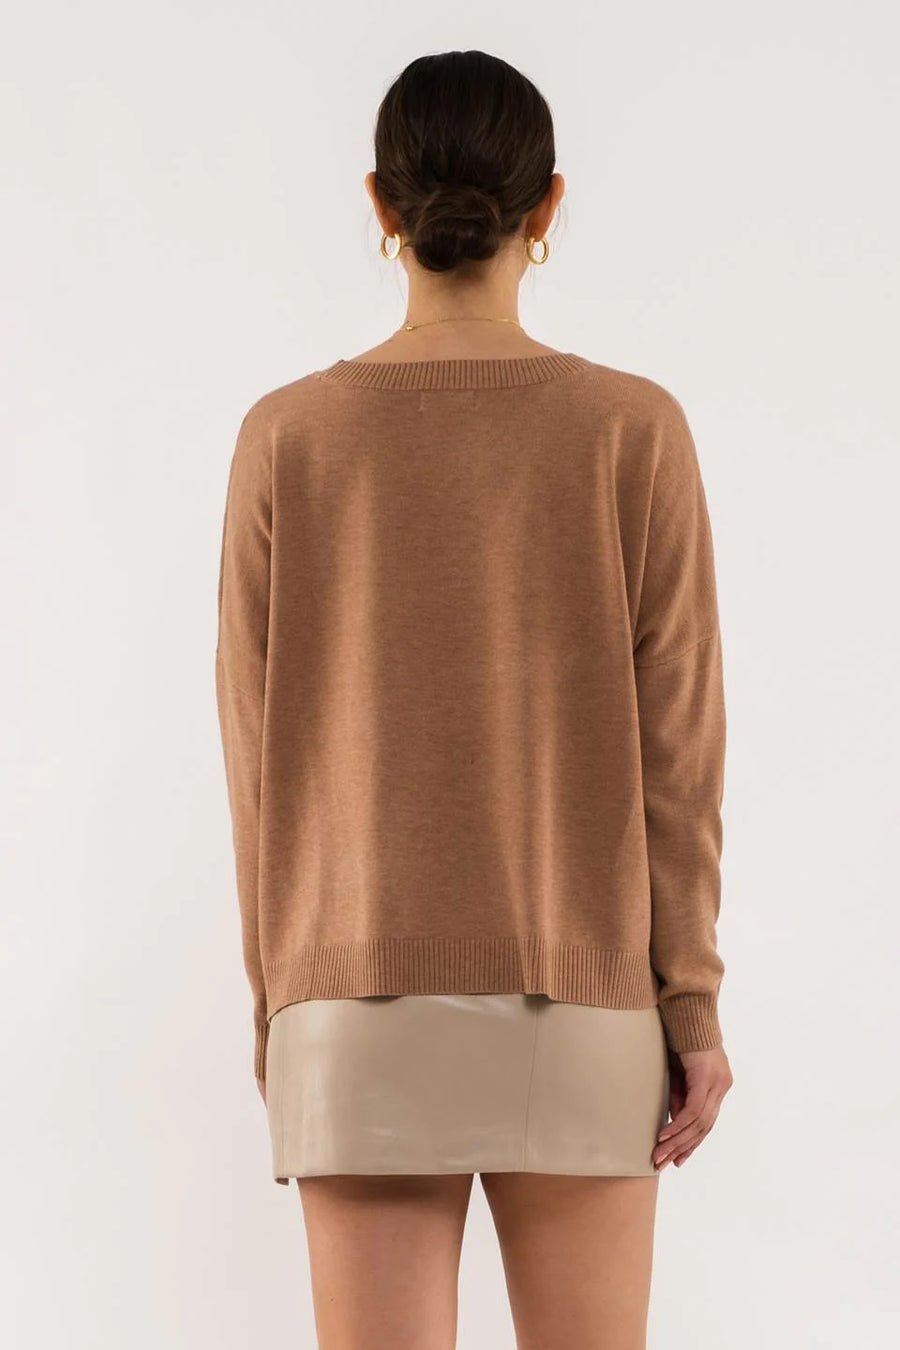 Evelyn Extended Shoulder Sweater | Sienna *FINAL SALE*